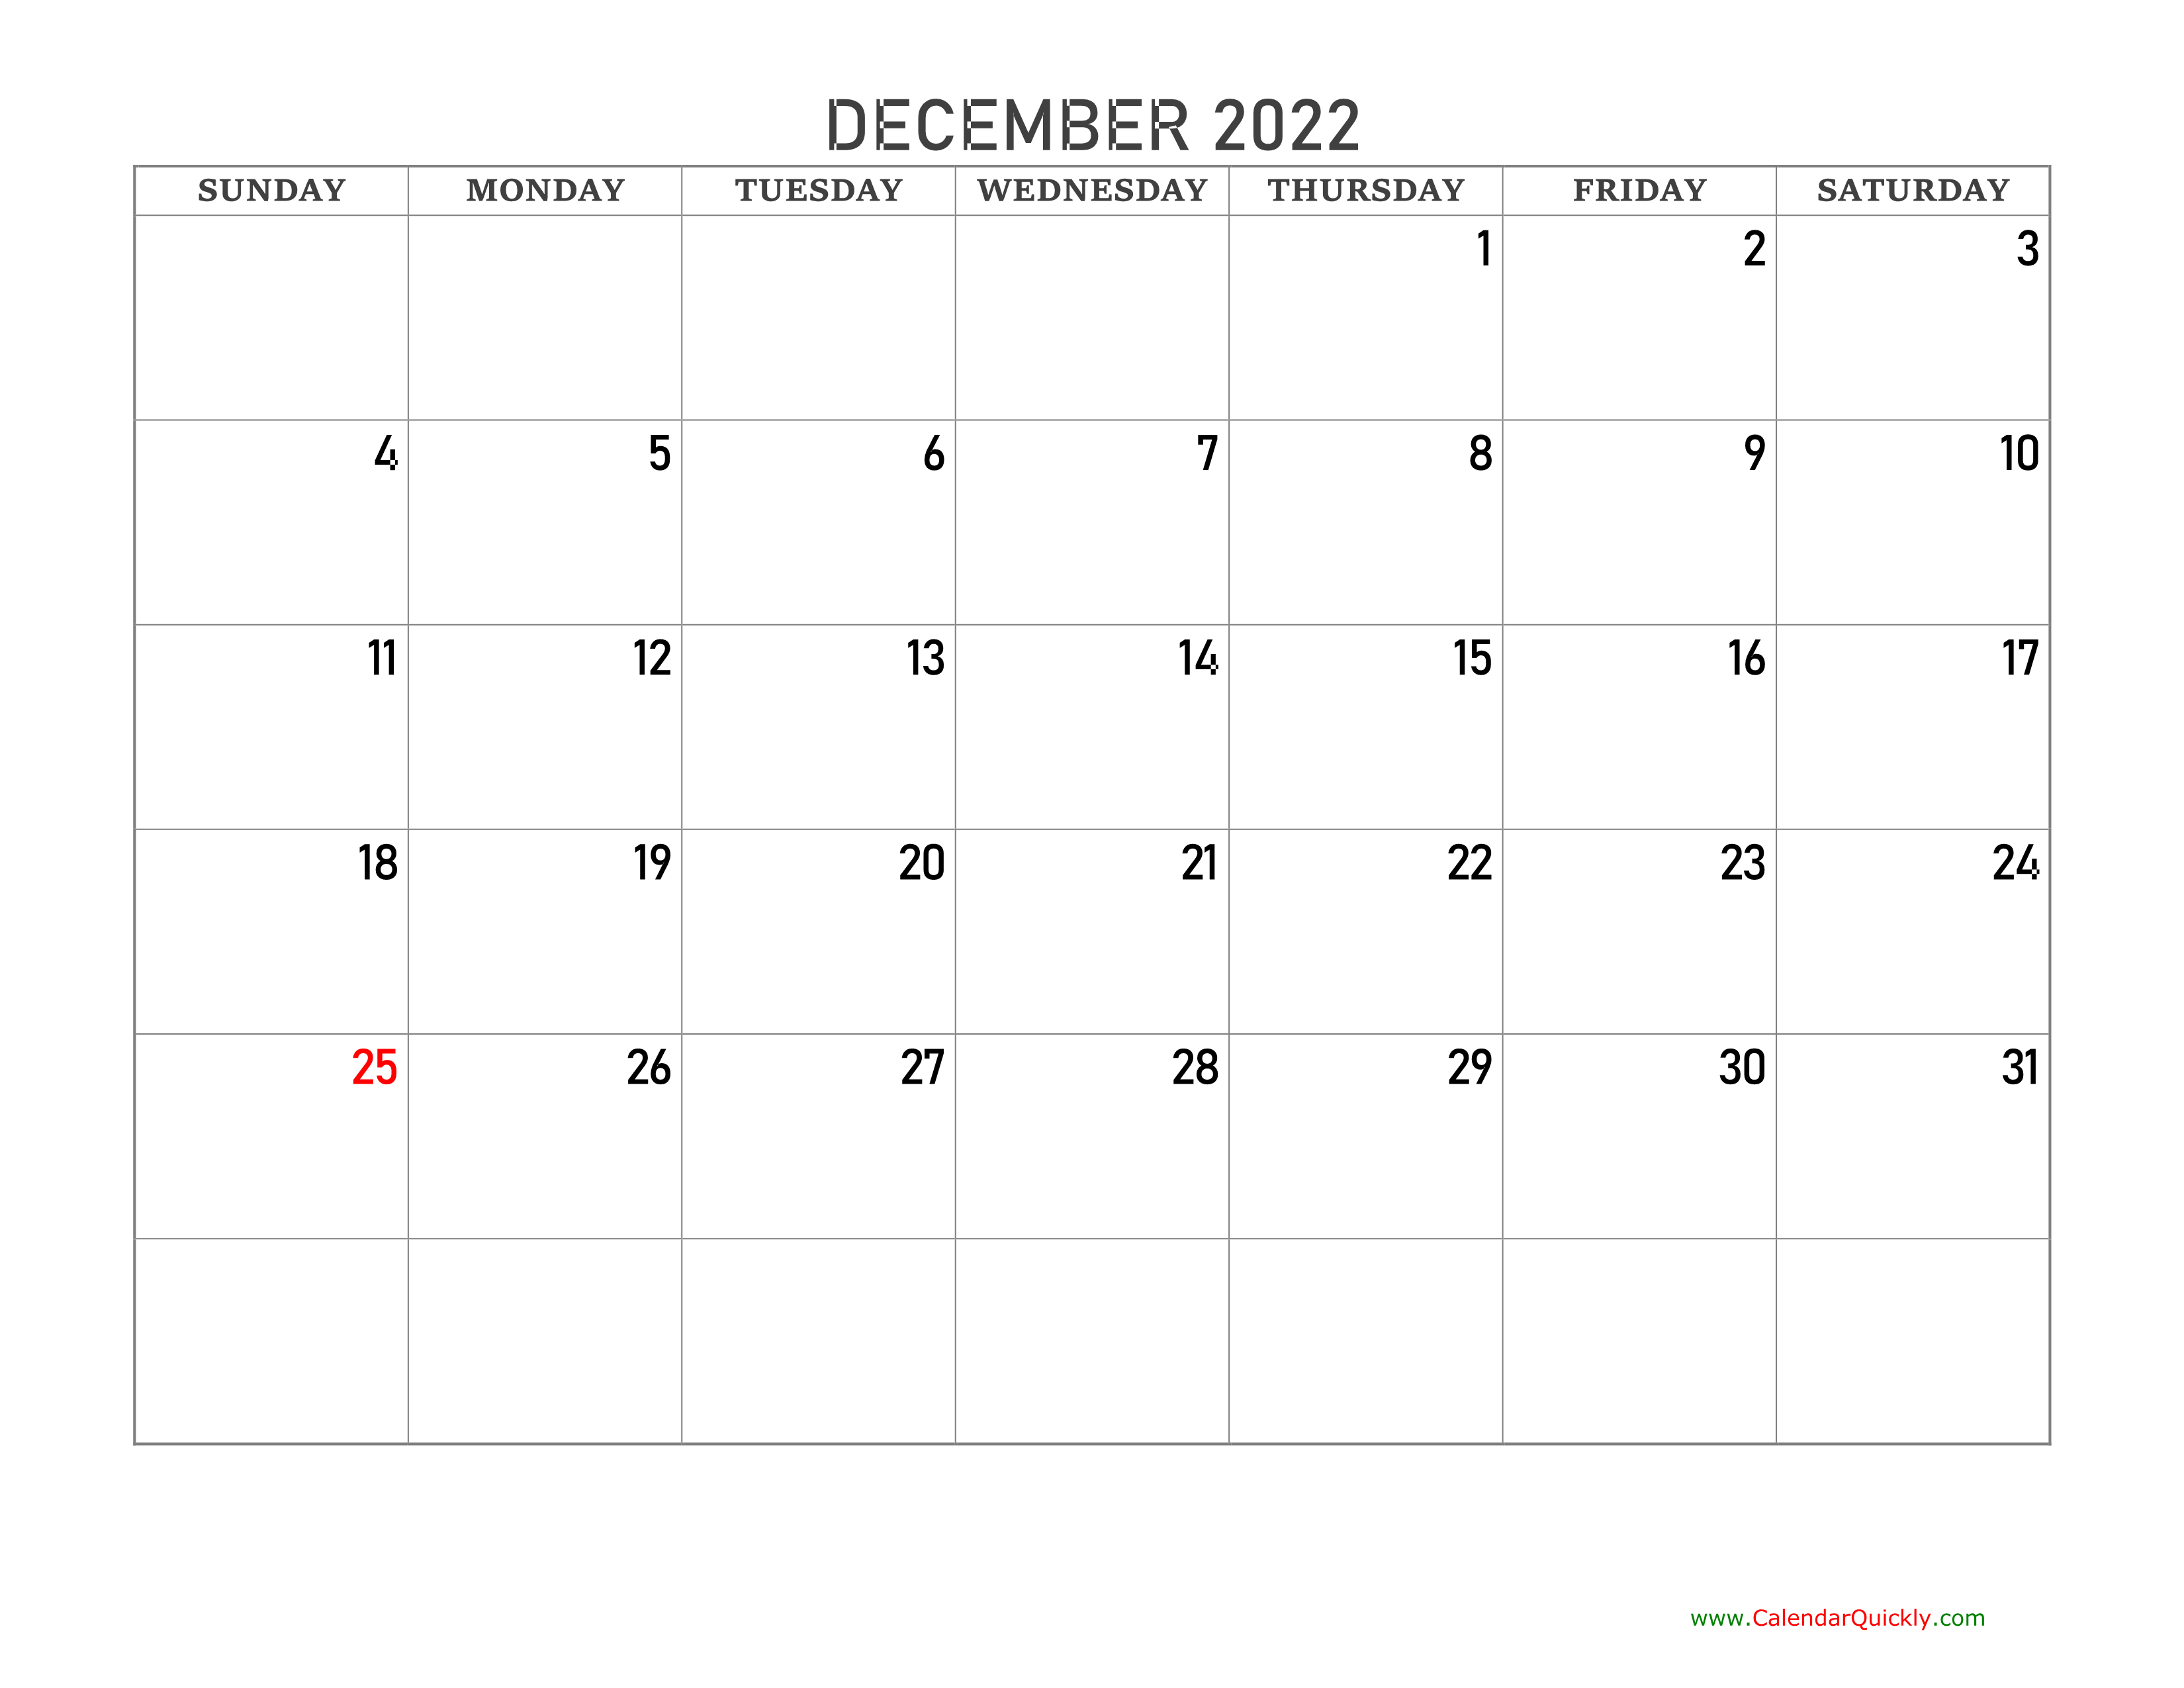 december-2022-blank-calendar-calendar-quickly